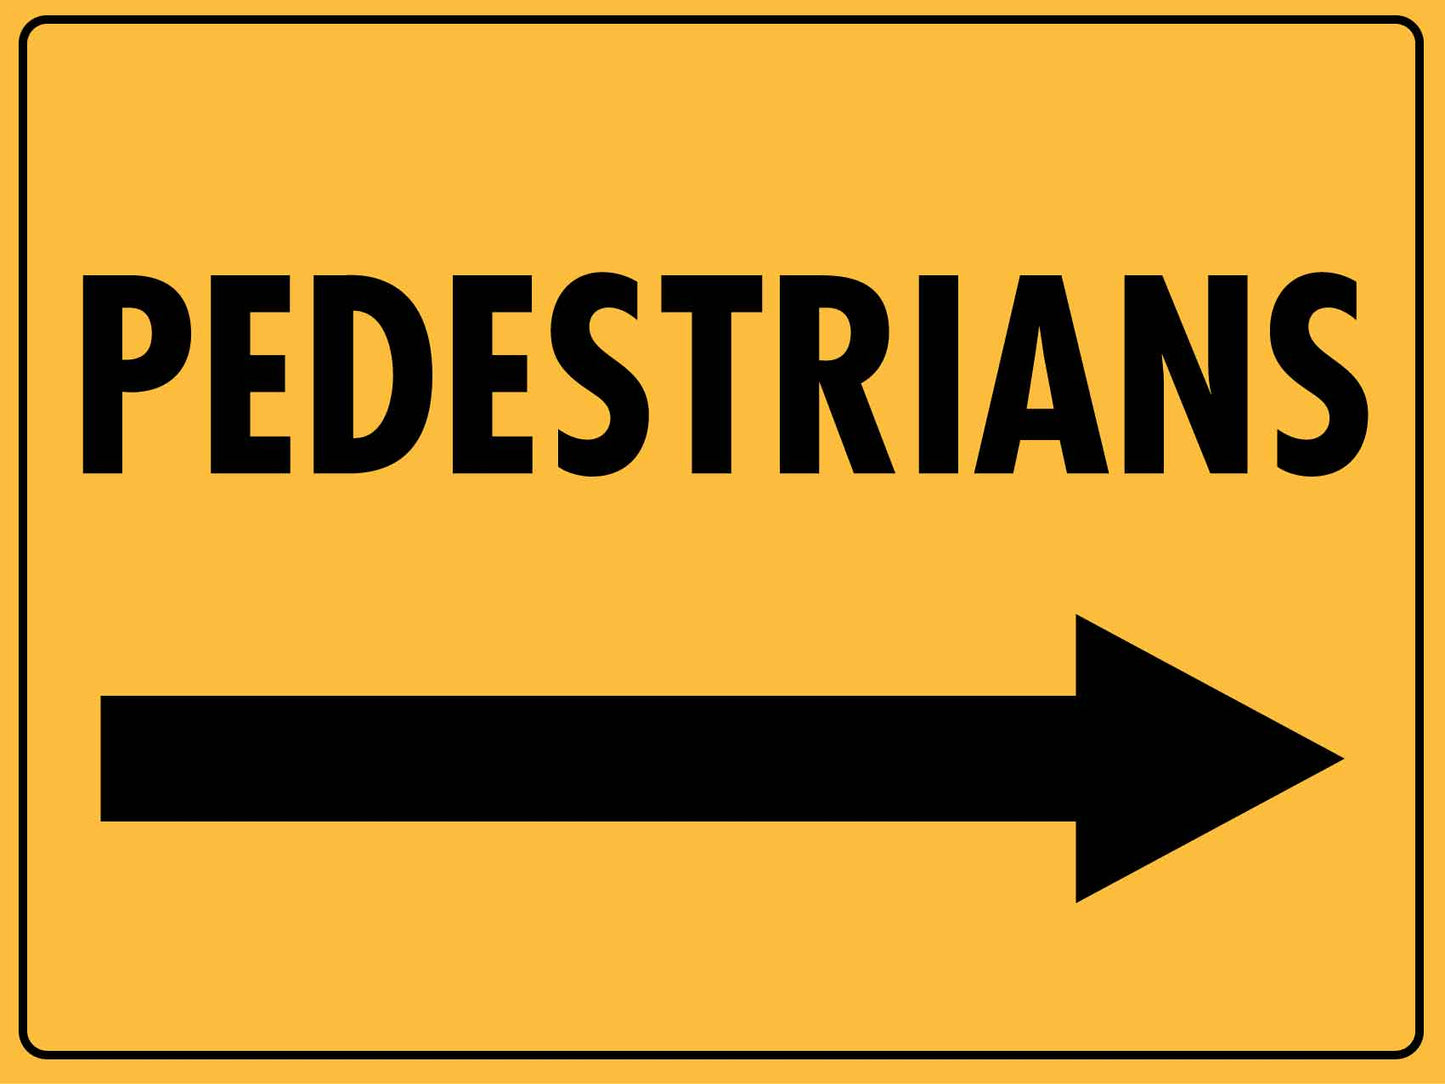 Pedestrians Right Sign